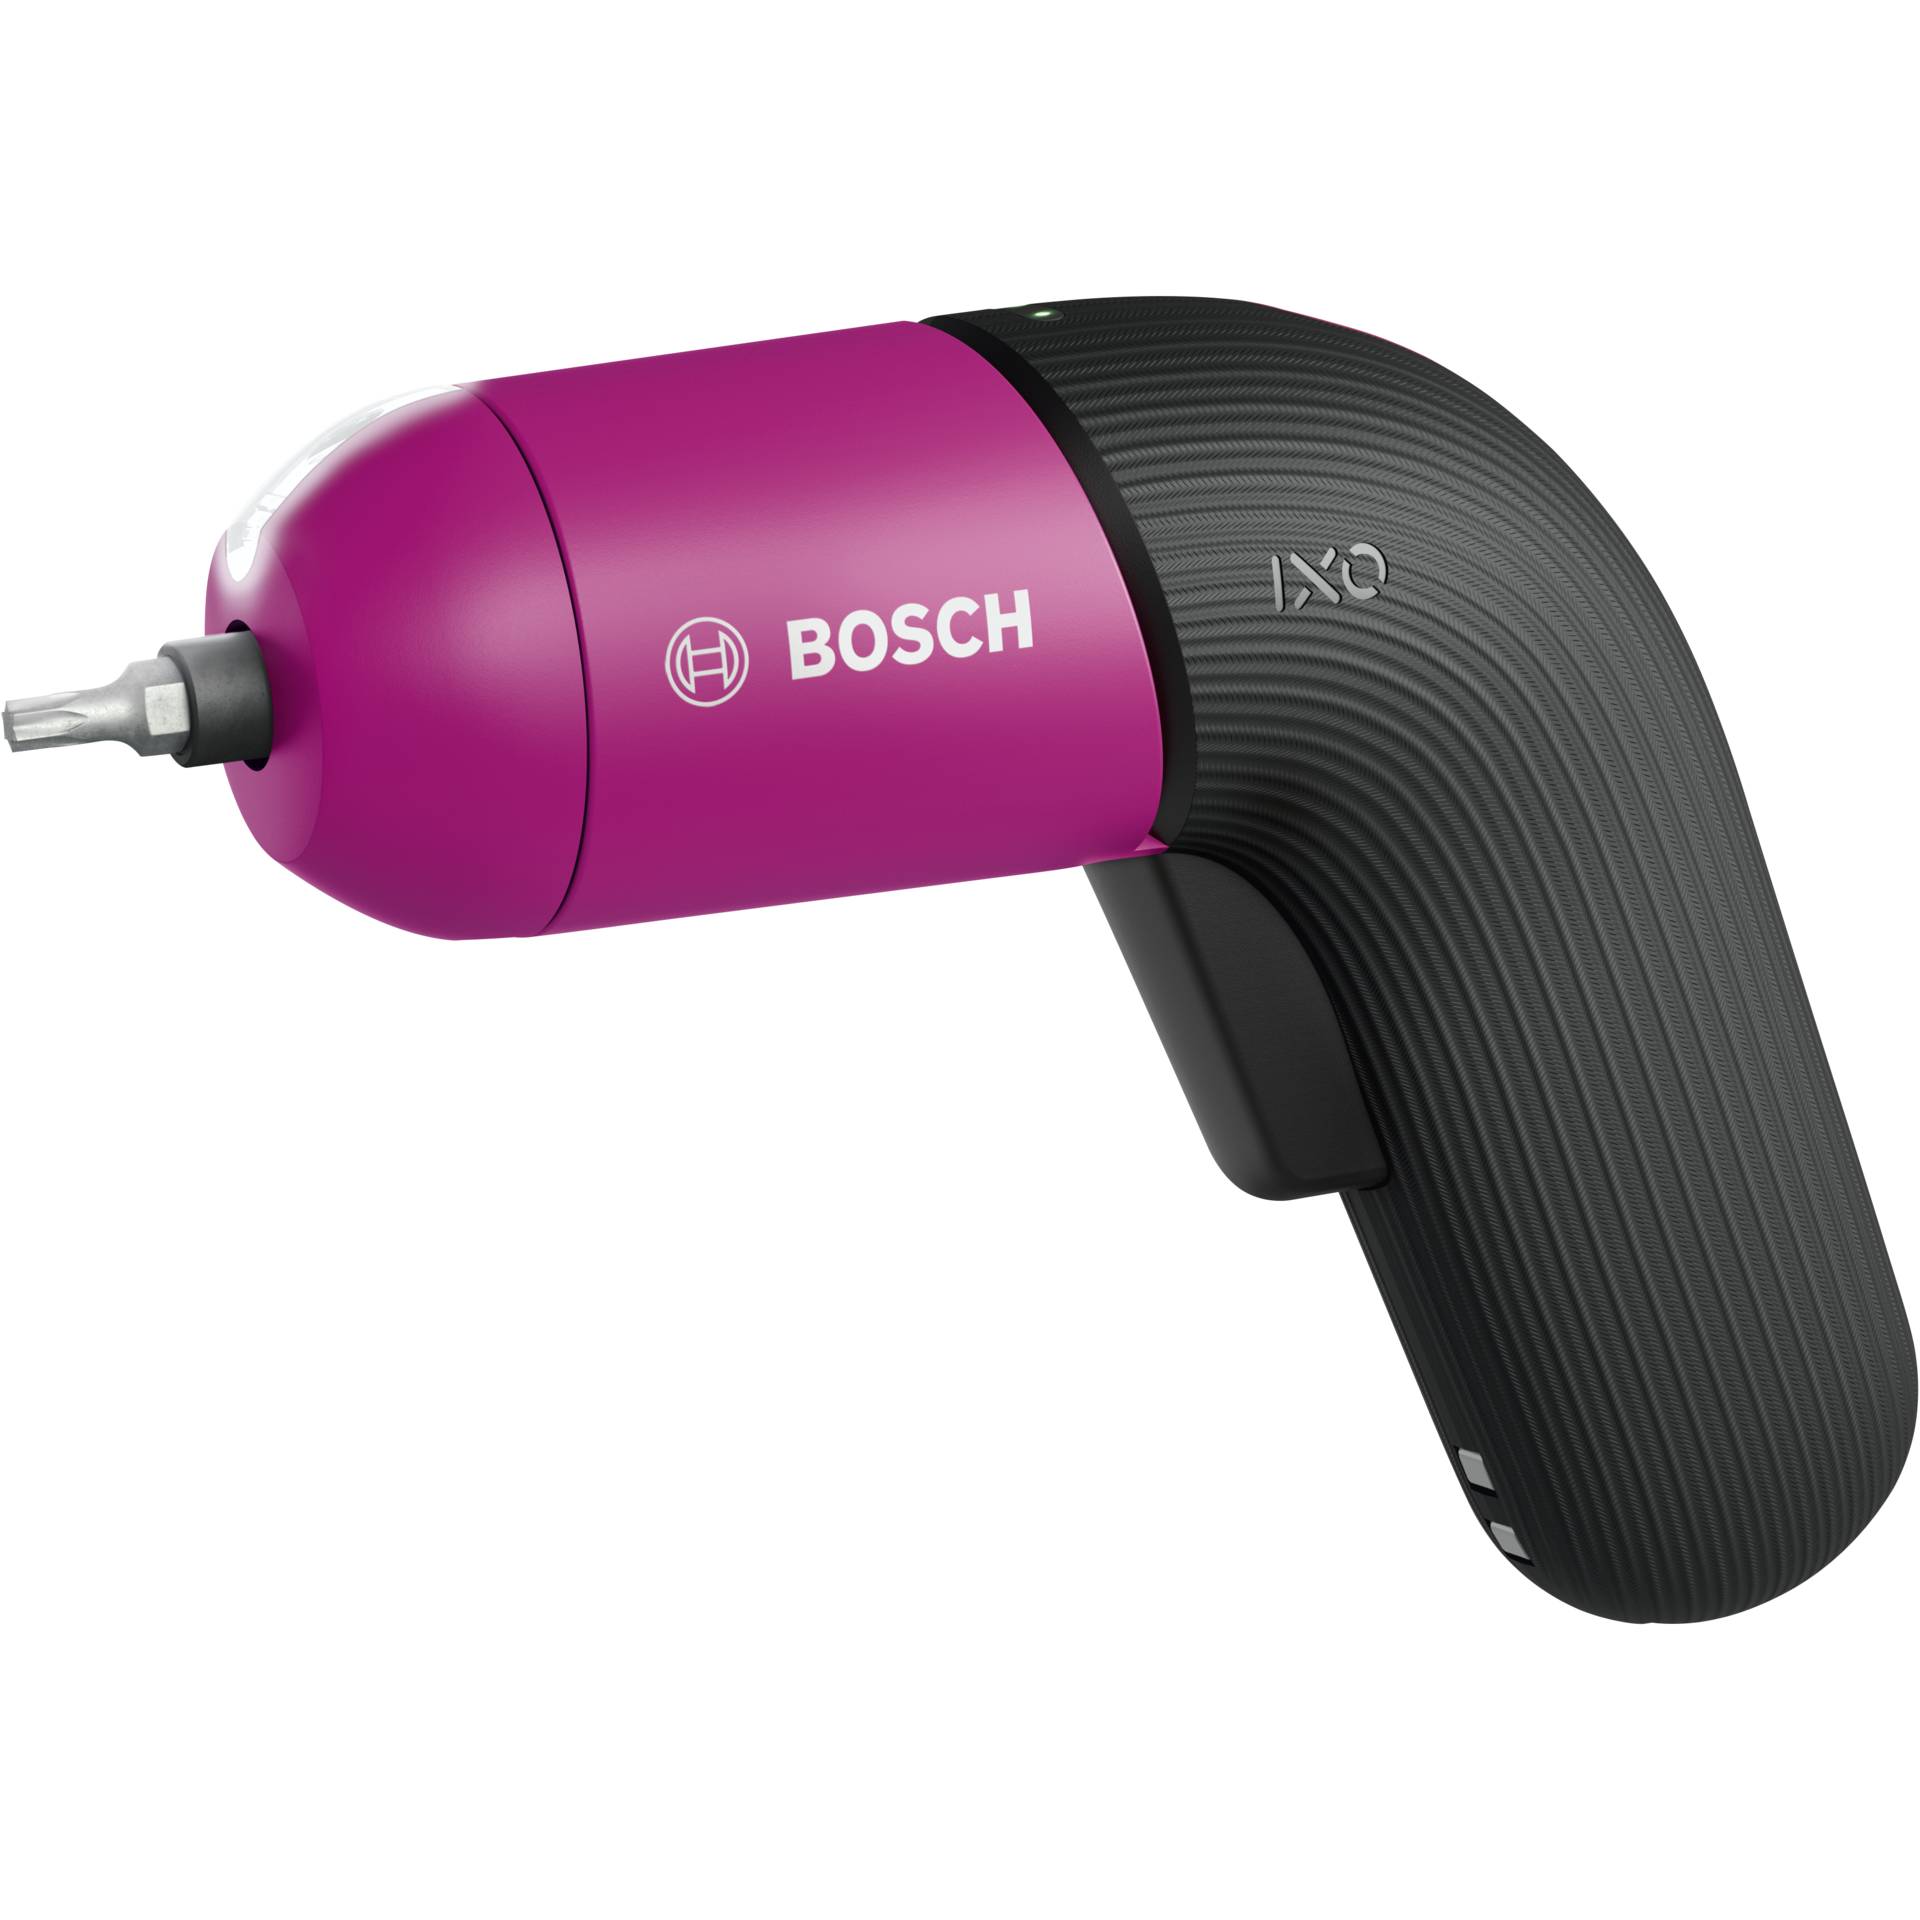 Bosch IXO Colour Edition 215 RPM Braun, Rot